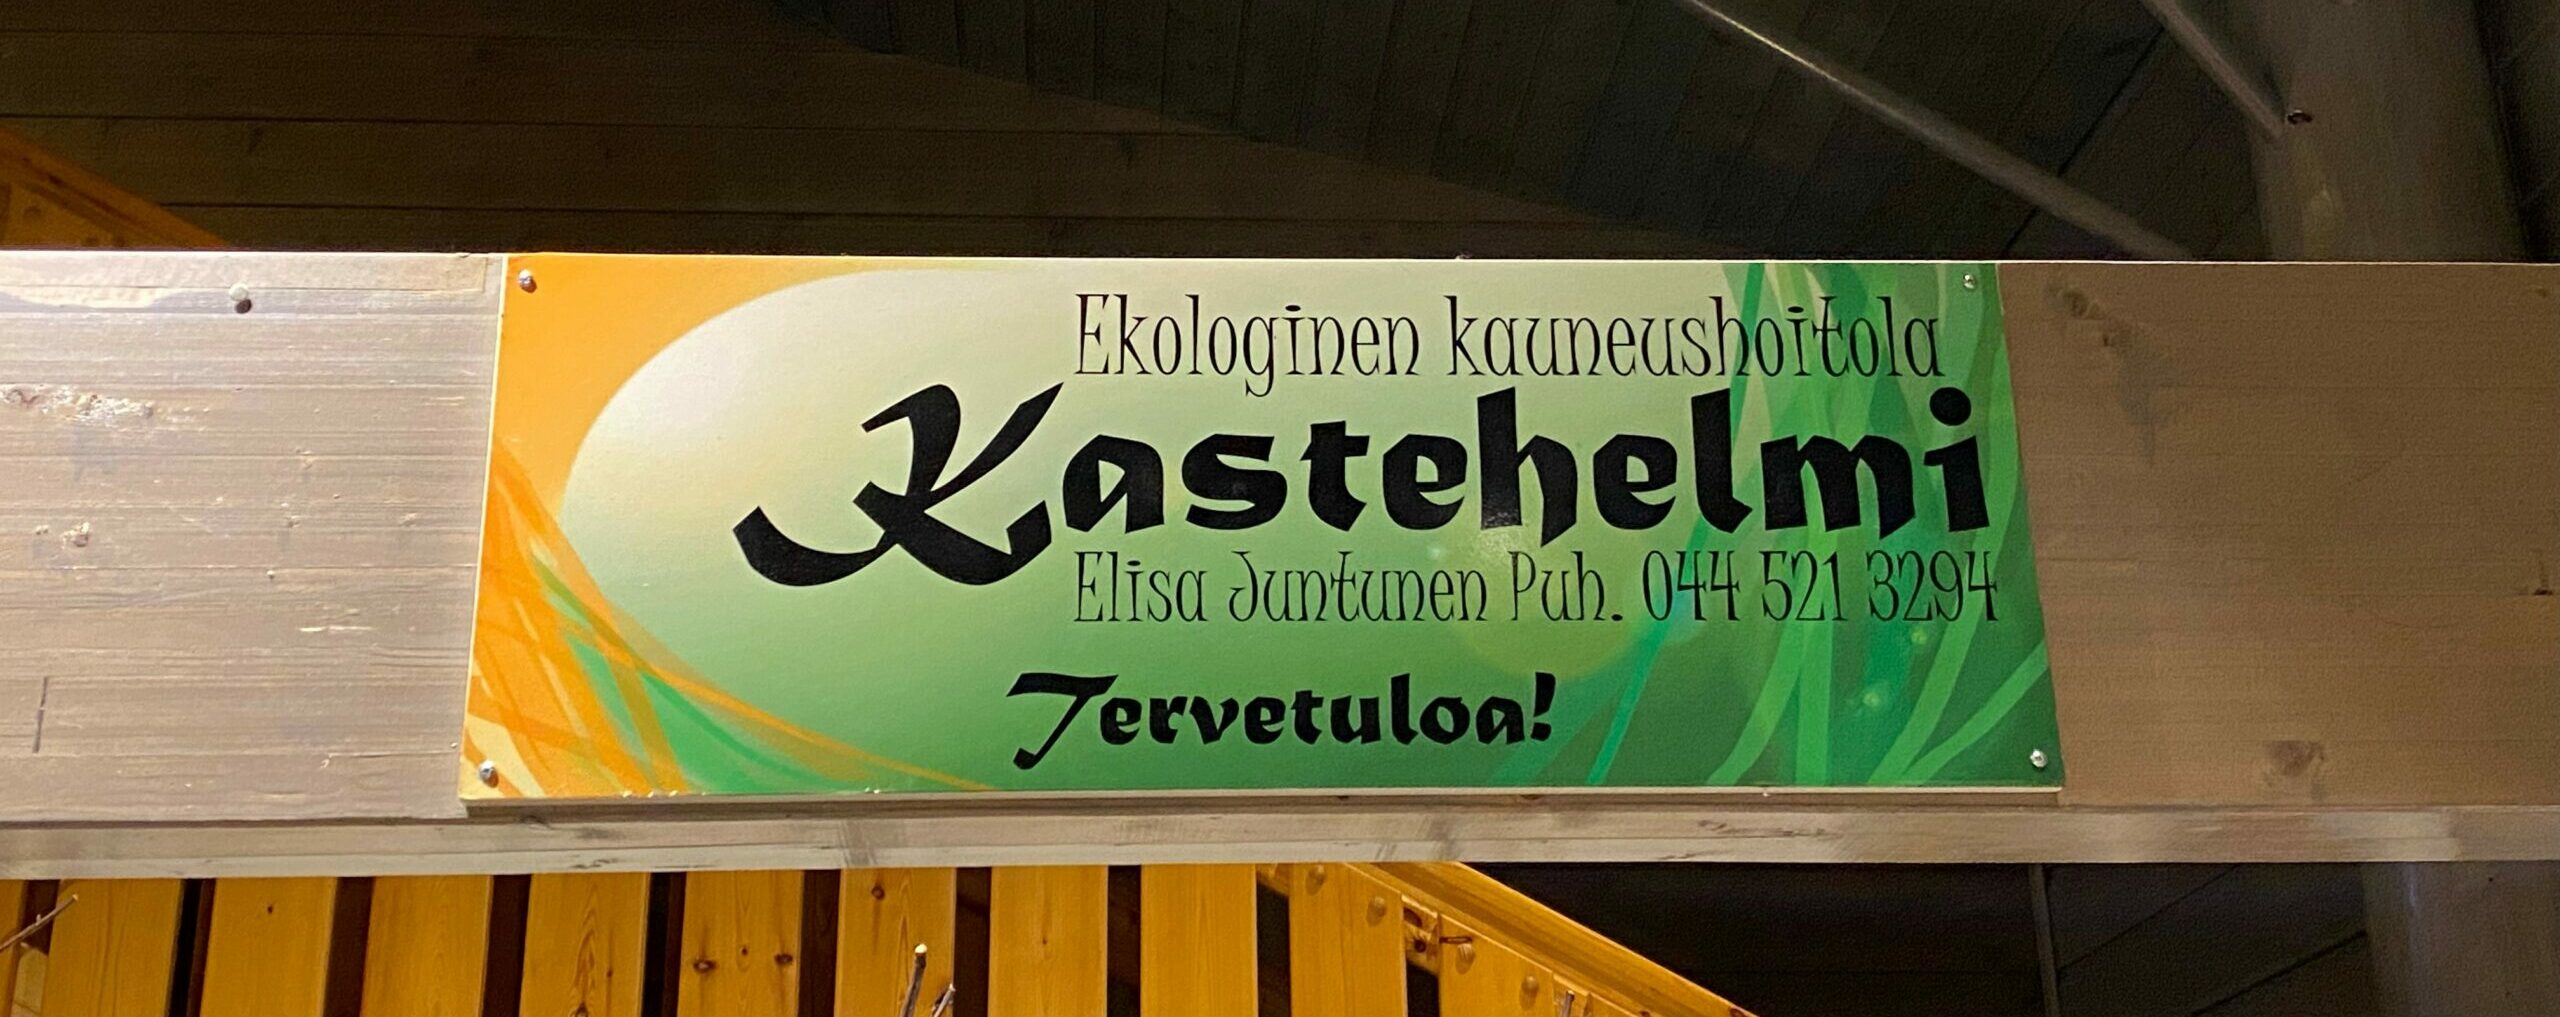 Ekologisen kauneushoitola Kastehelmen logo.